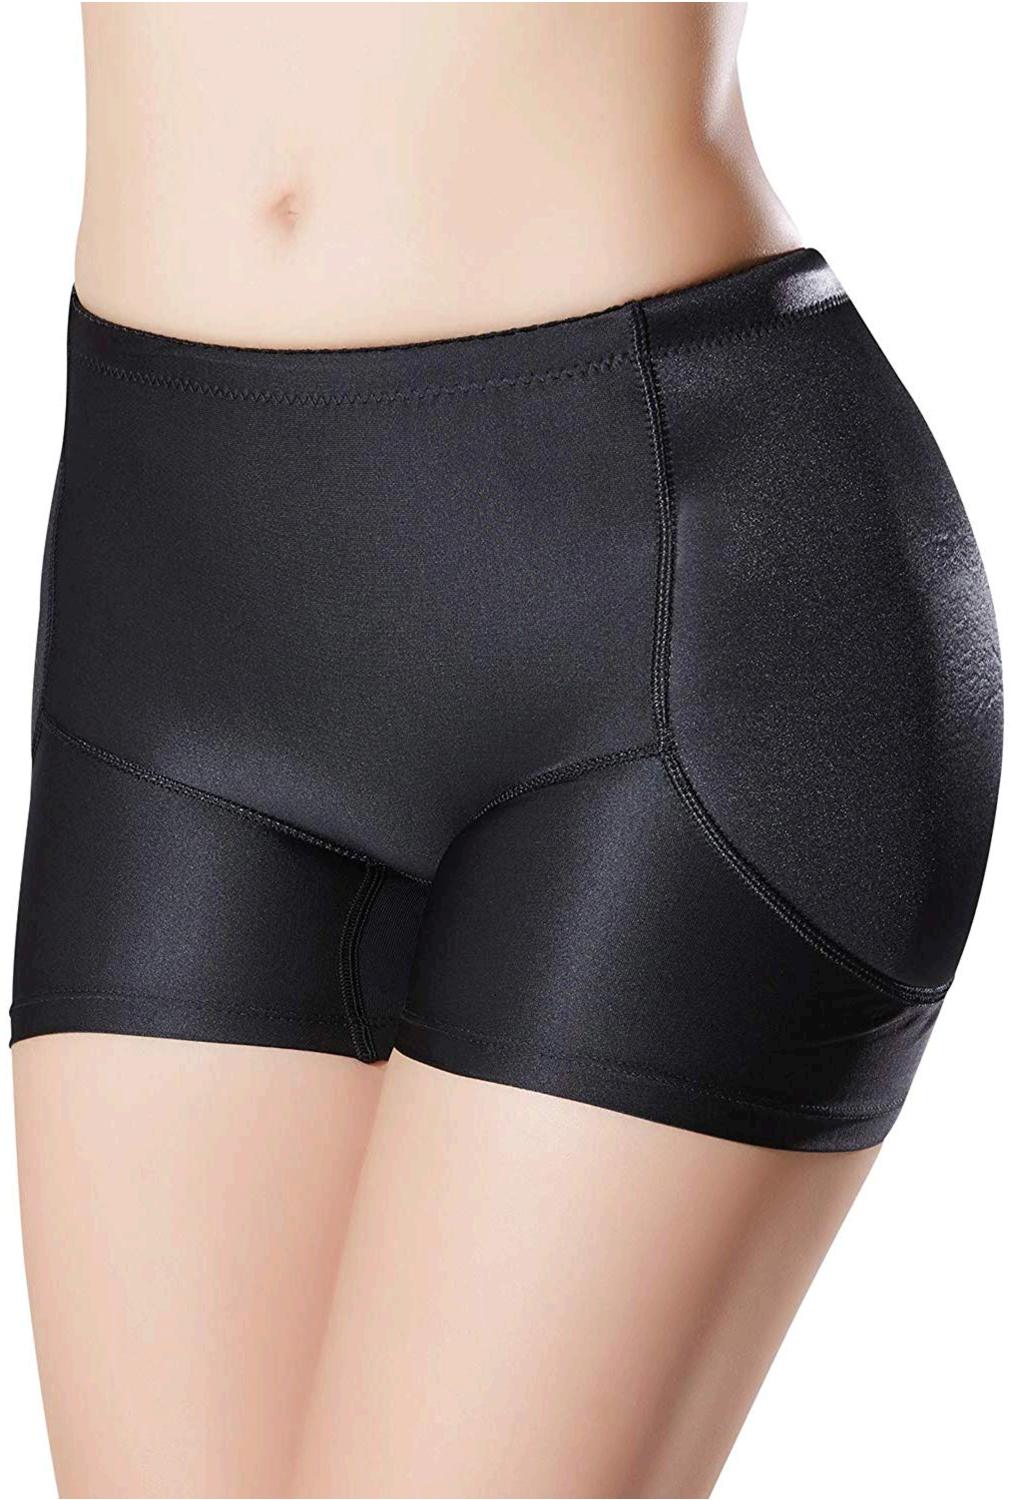 Defitshape Womens Padded Seamless Shapewear Panties Hip Black Size 140 Bdxm Ebay